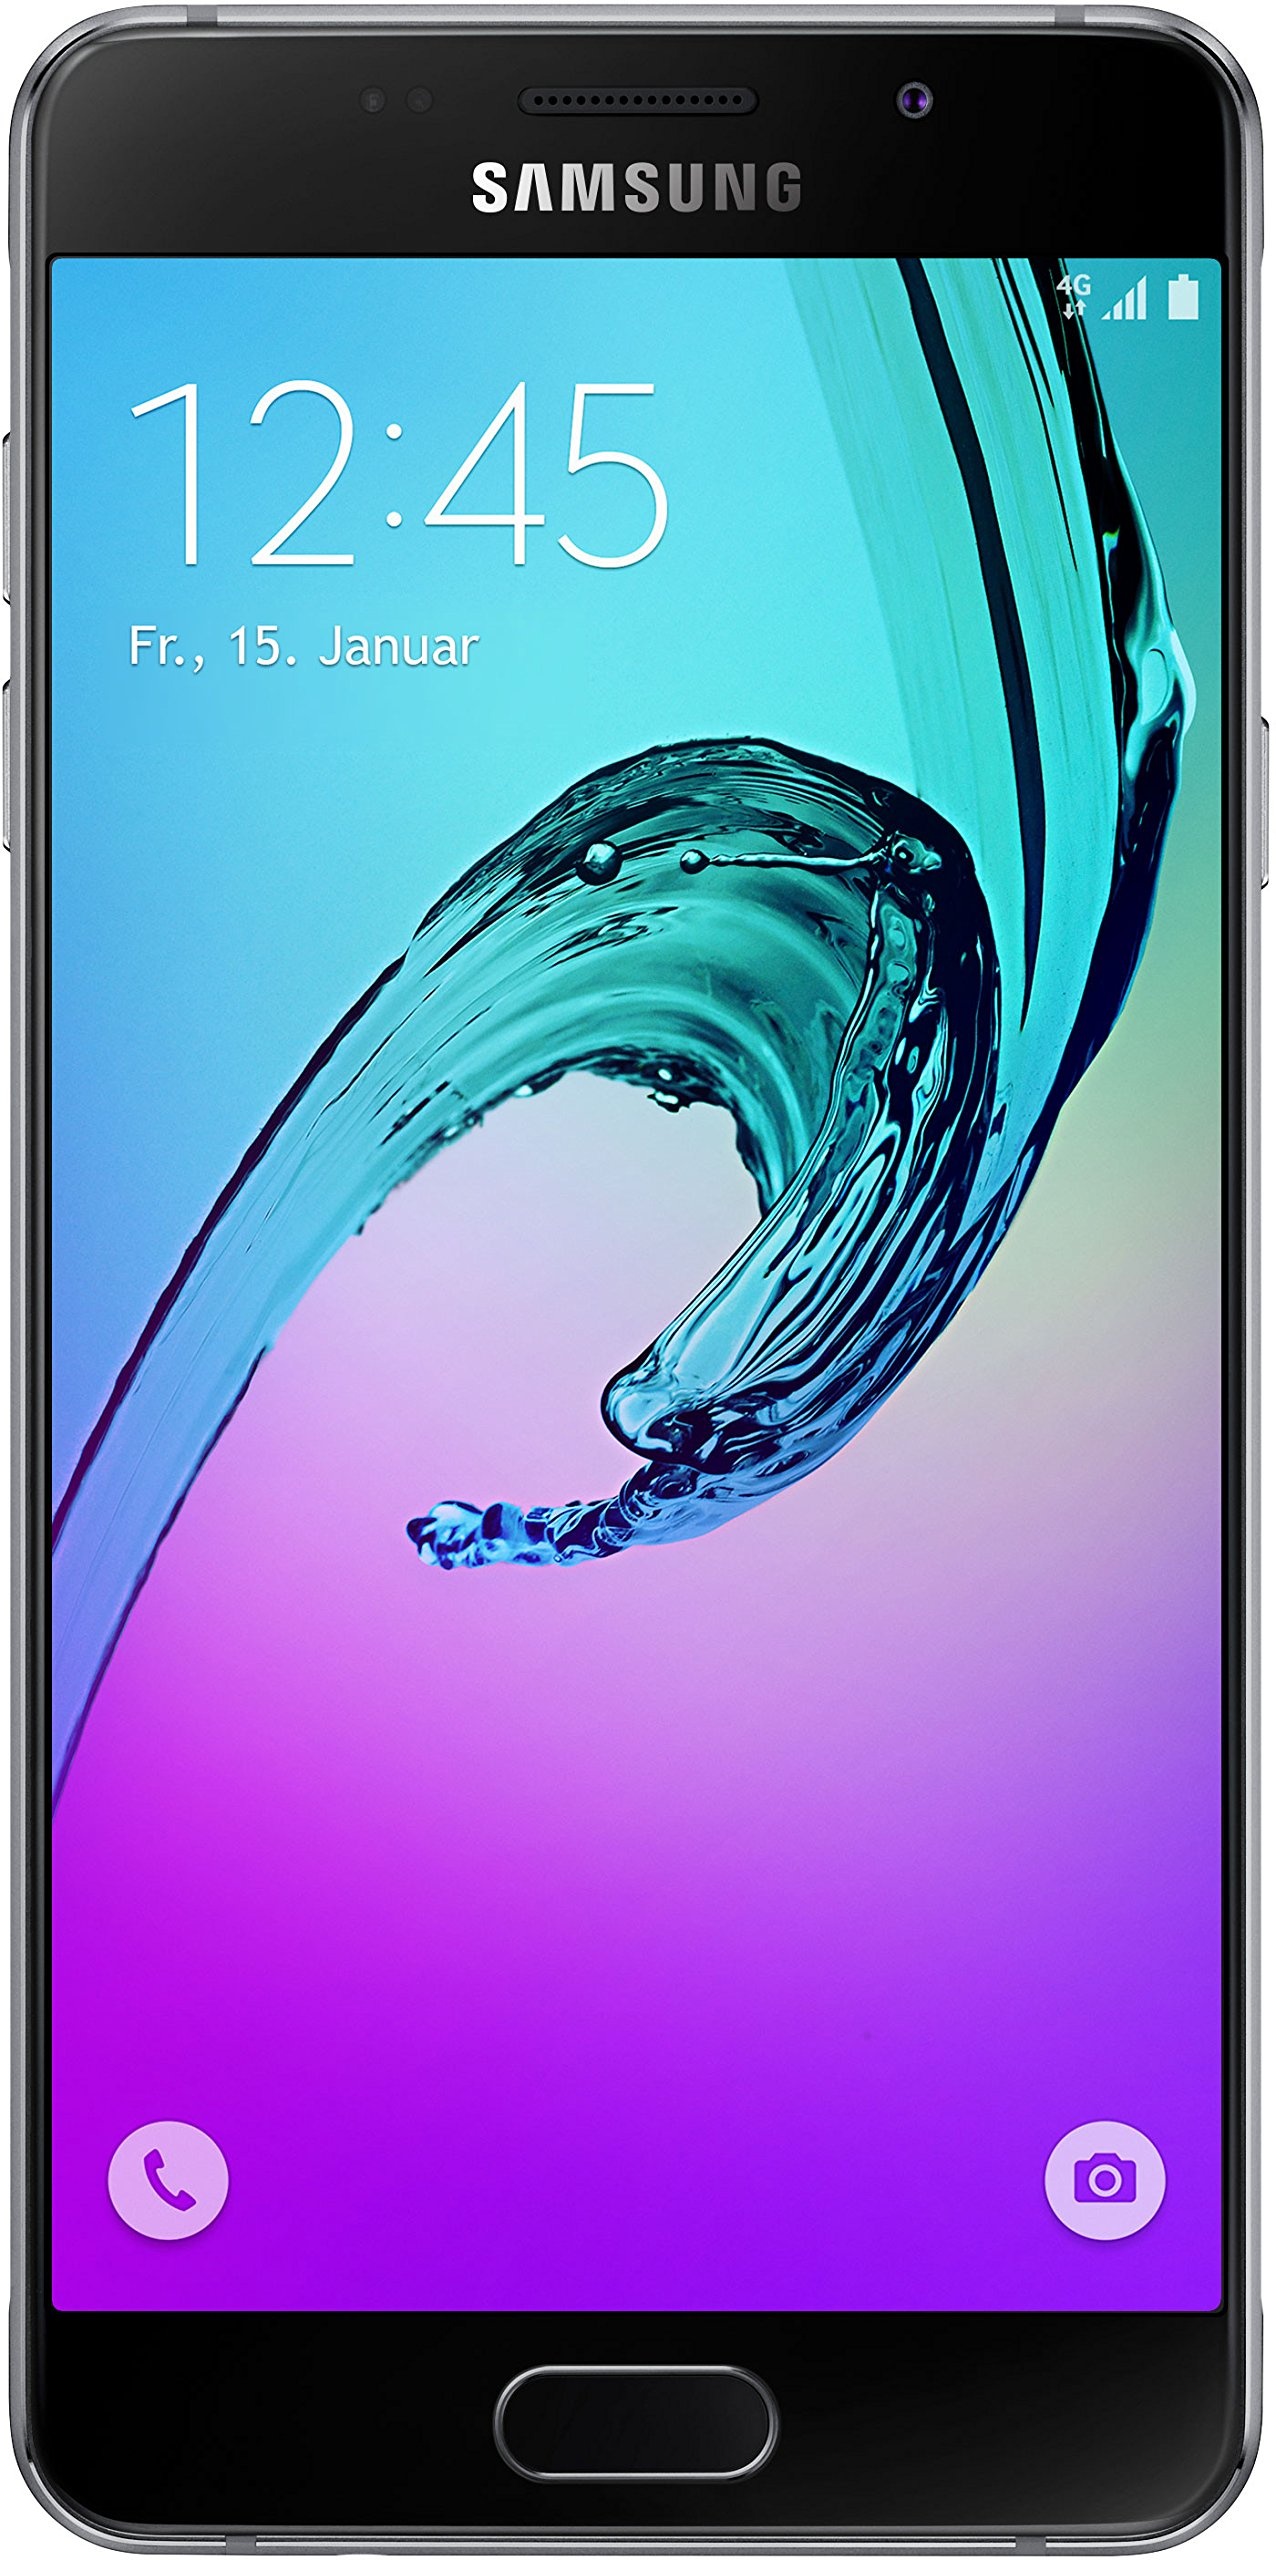 Samsung Galaxy A5 (2016) Smartphone (5,2 Zoll (13,22 cm) Touch-Display, 16 GB Speicher, Android 5.1) schwarz